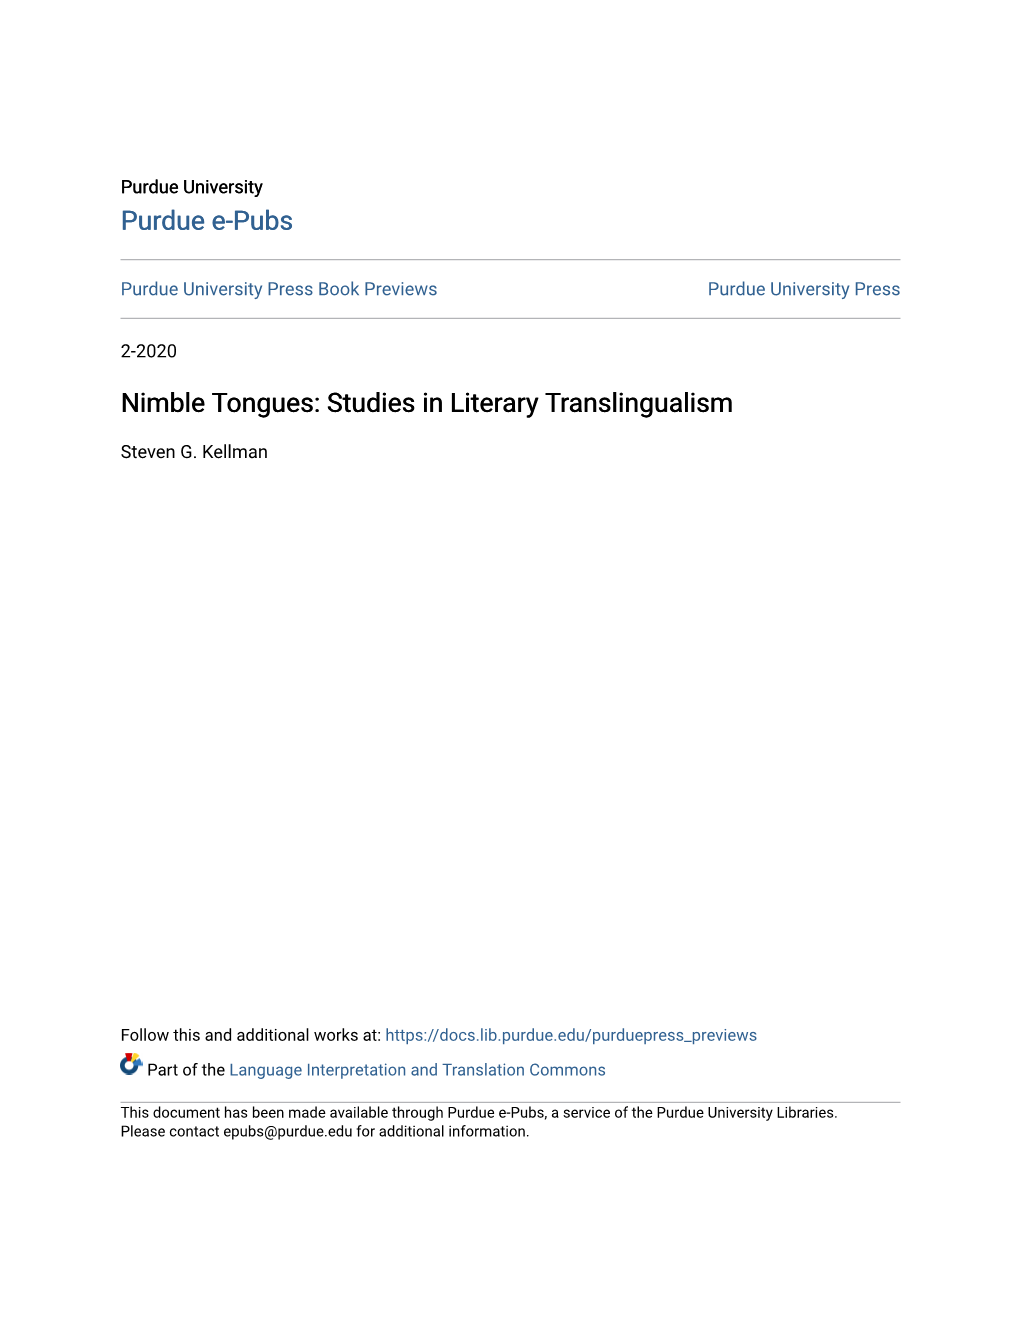 Nimble Tongues: Studies in Literary Translingualism